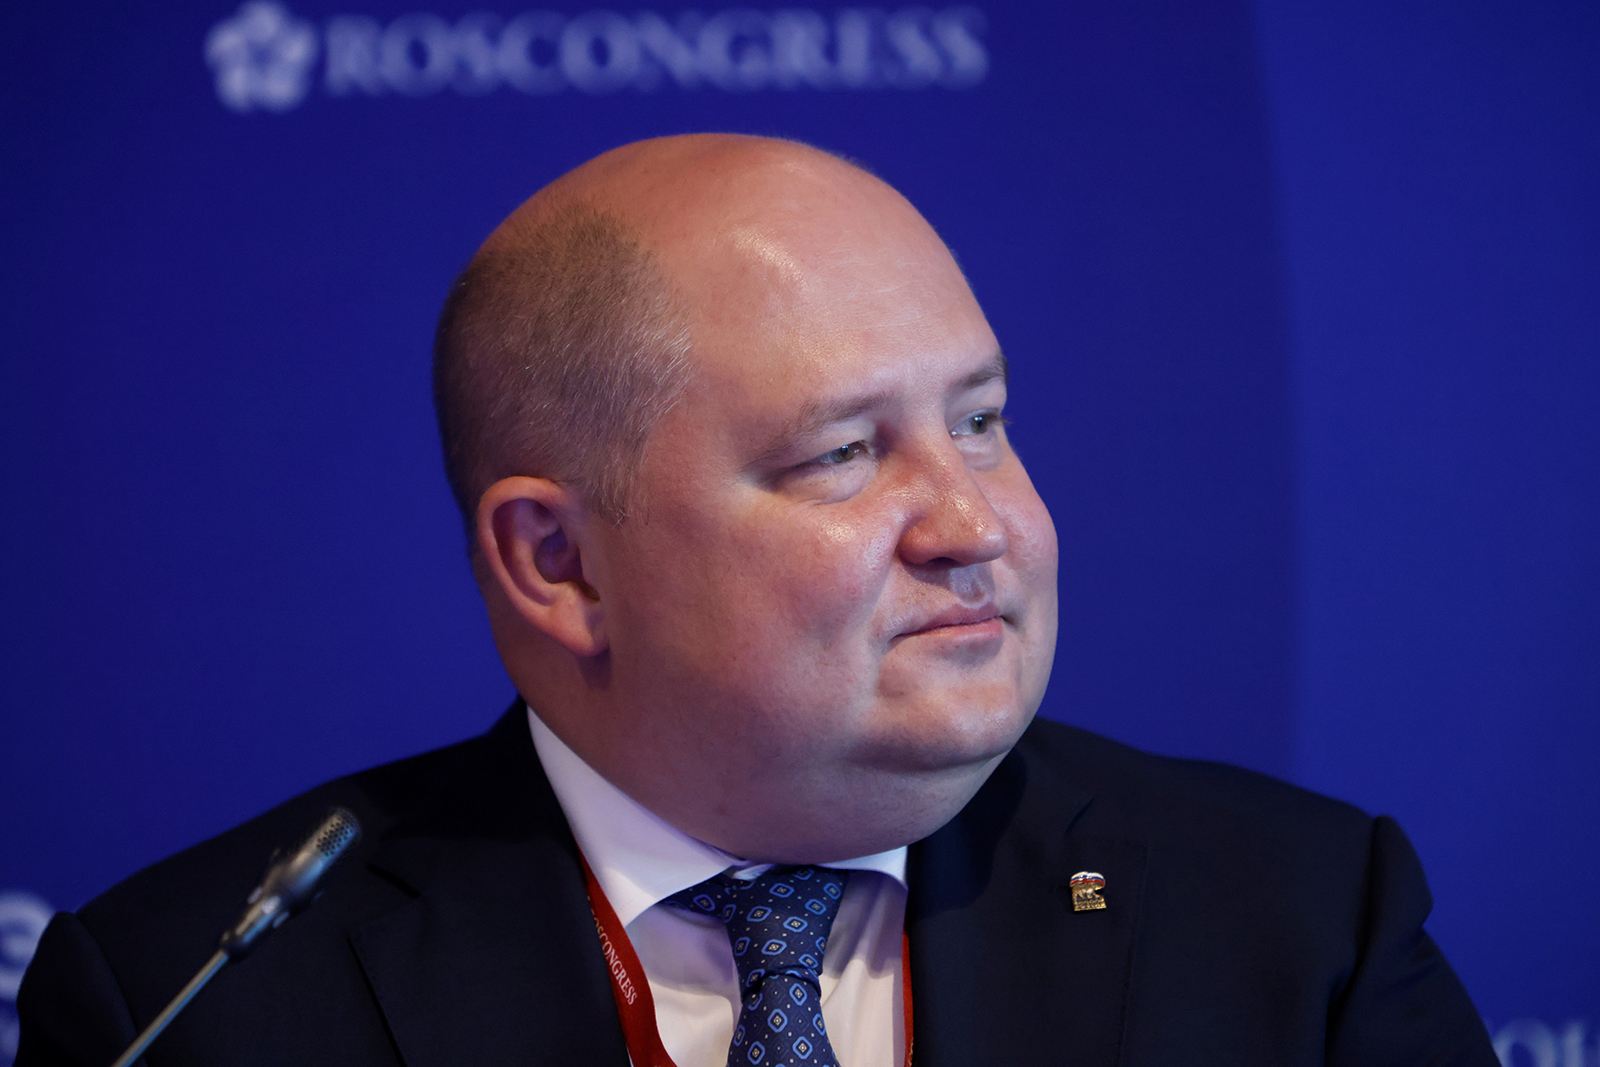 Mikhail Razvozhaev attends an event in Saint Petersburg, Russia on June 16, 2022.